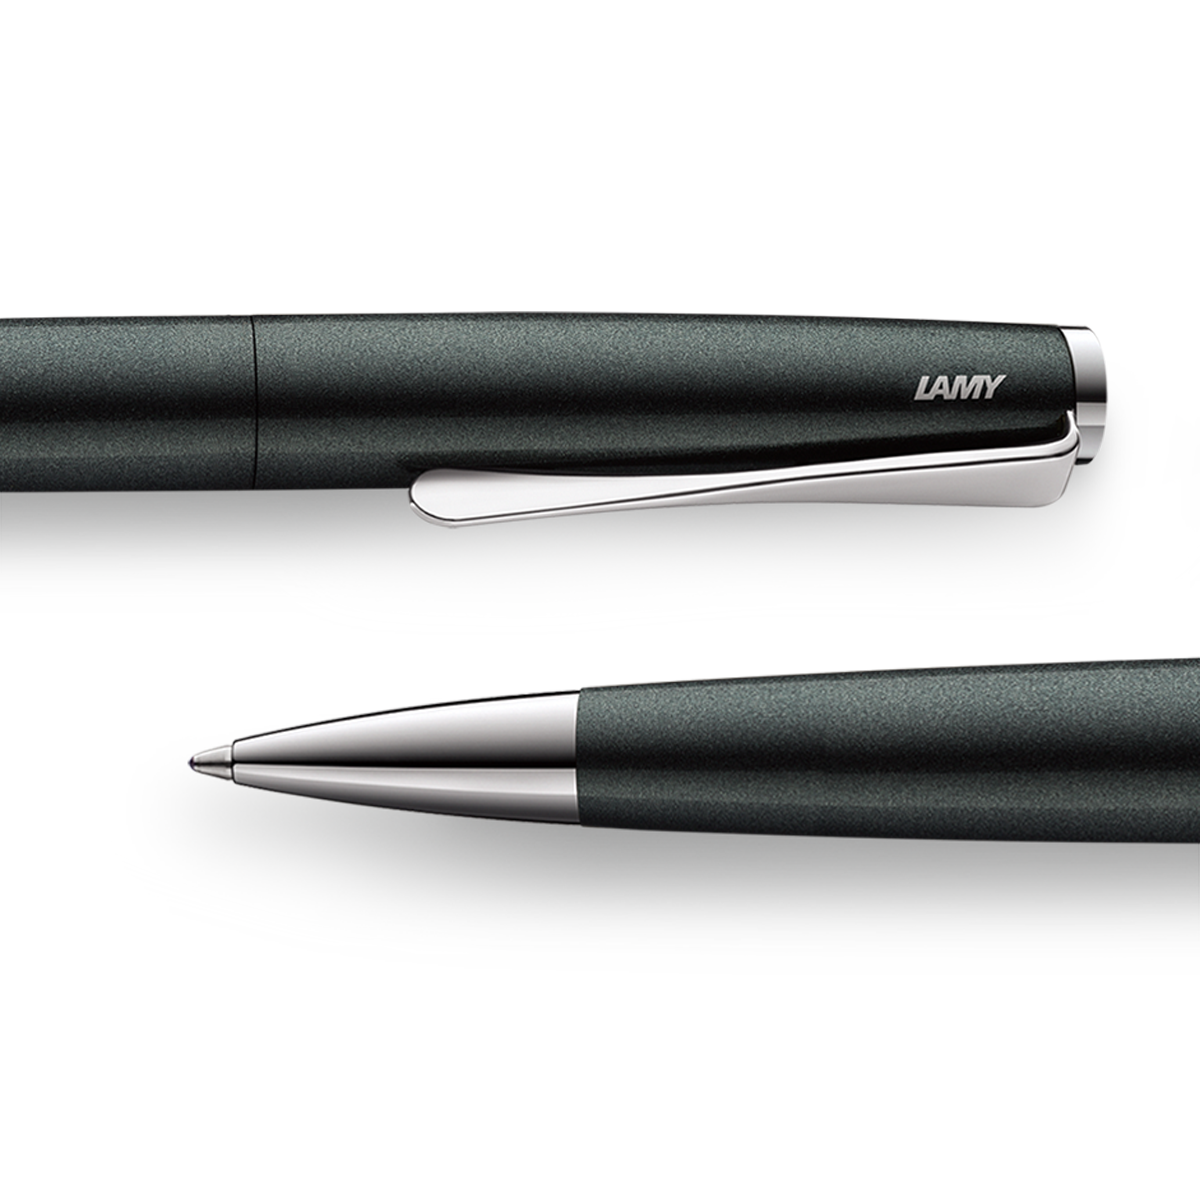 Studio Black Forest Ballpoint pen in the group Pens / Fine Writing / Ballpoint Pens at Pen Store (126943)